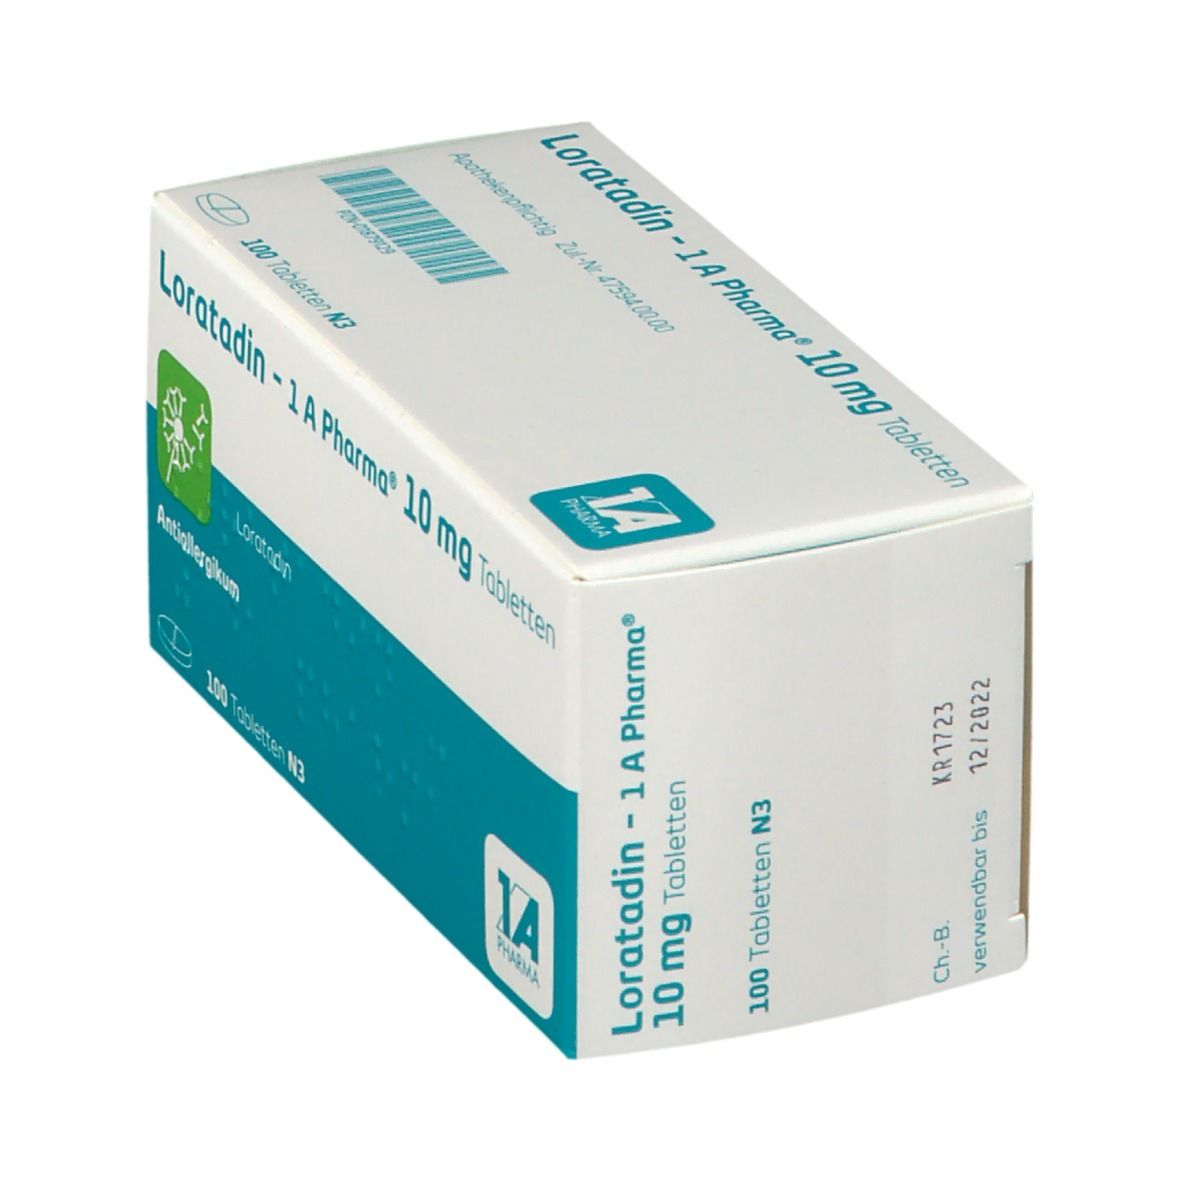 Loratadin - 1A Pharma®